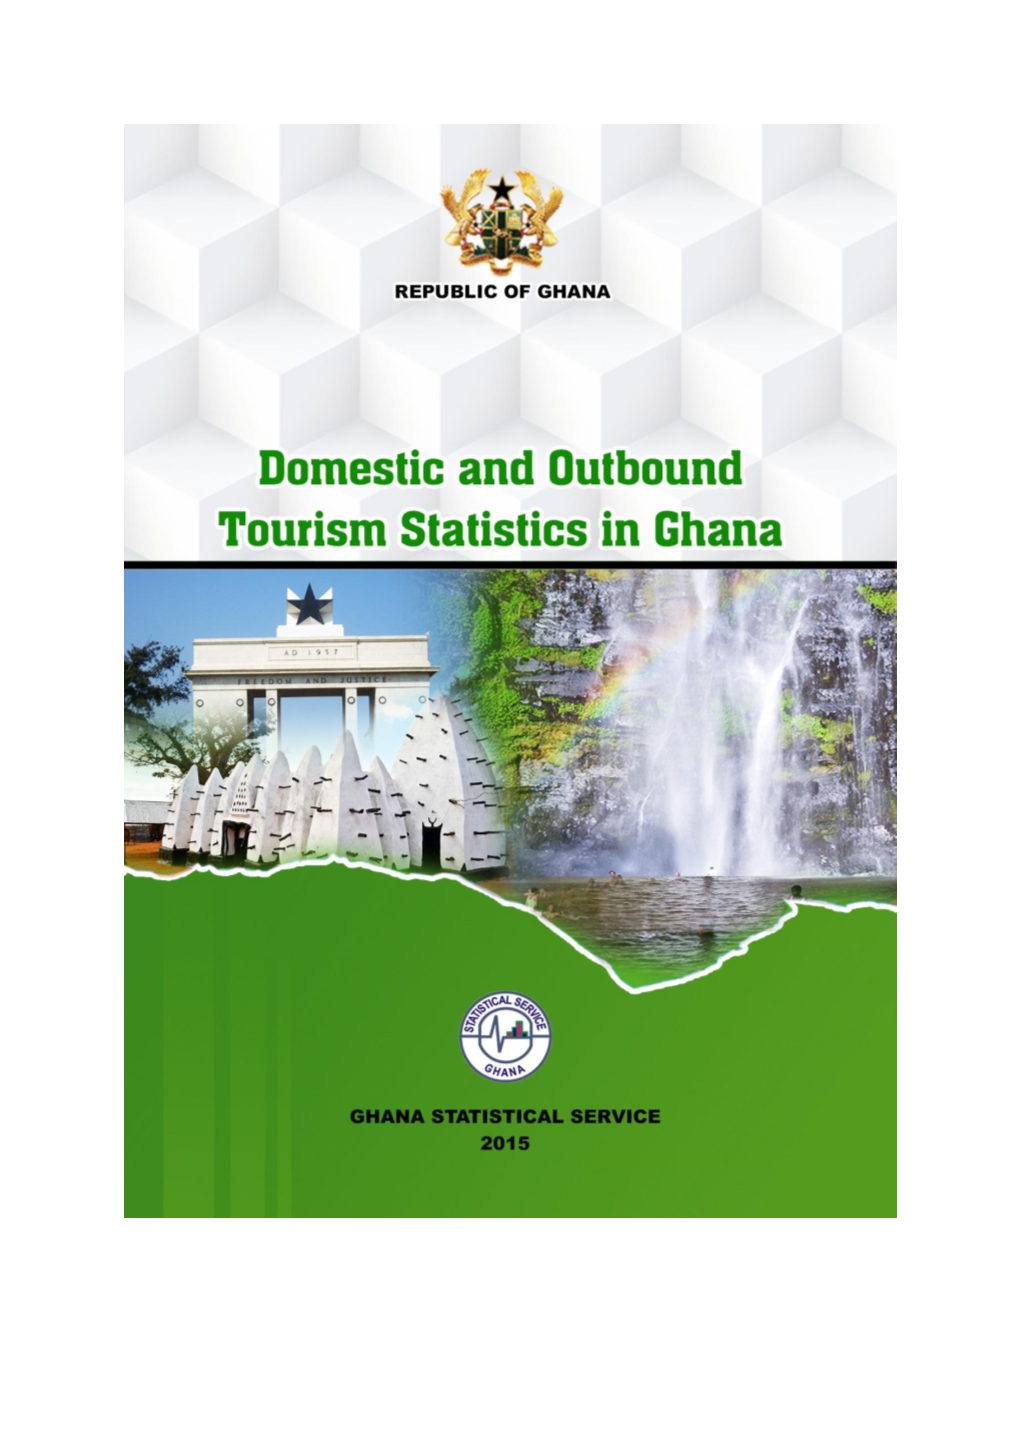 Tourism Statistics in Ghana